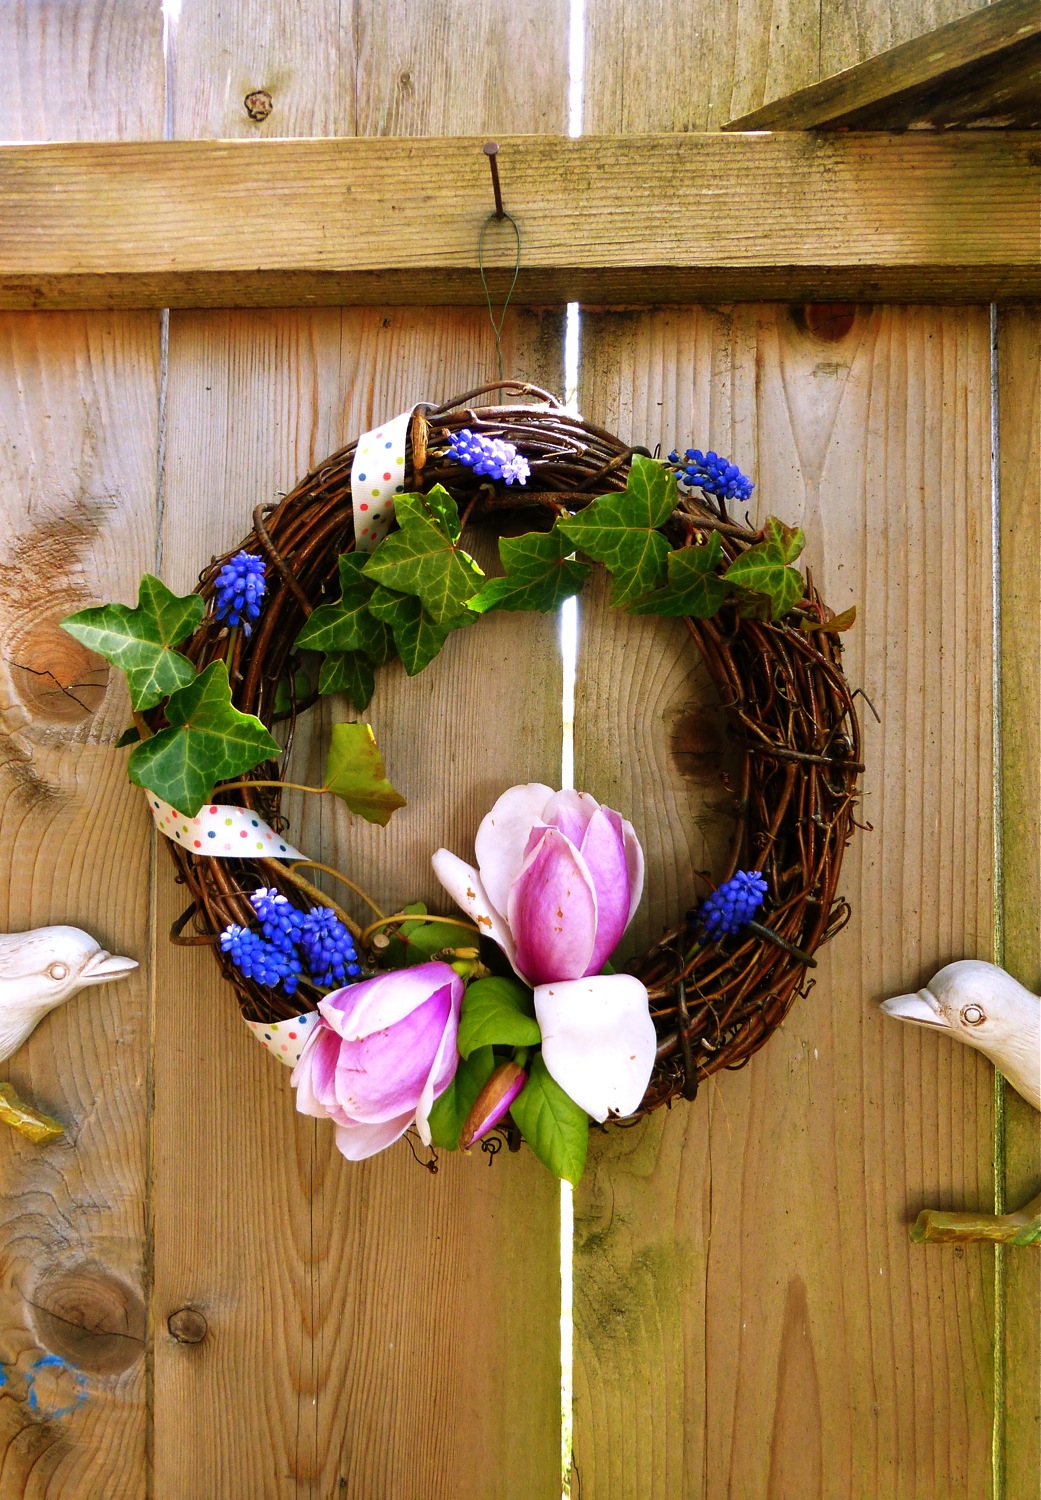 floral wreath, spring floral wreath, magnolia wreath, ivy wreath, muscari wreath, grape hyacinth wreath, DIY wreath, do it yourself spring wreath, foraged wreath, spring foraged wreath, DIY: Foraged Spring Wreath, make a spring floral wreath, ideas for spring wreaths